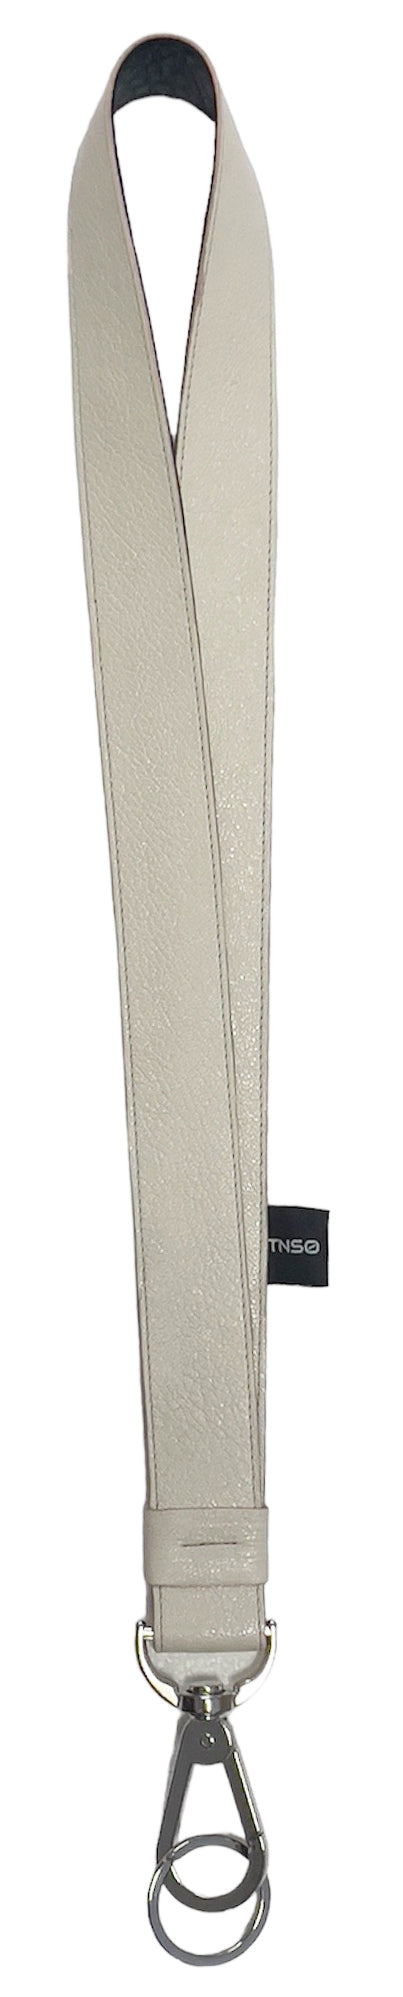 TNSO portachiavi Leather Lanyard Limited Edition white